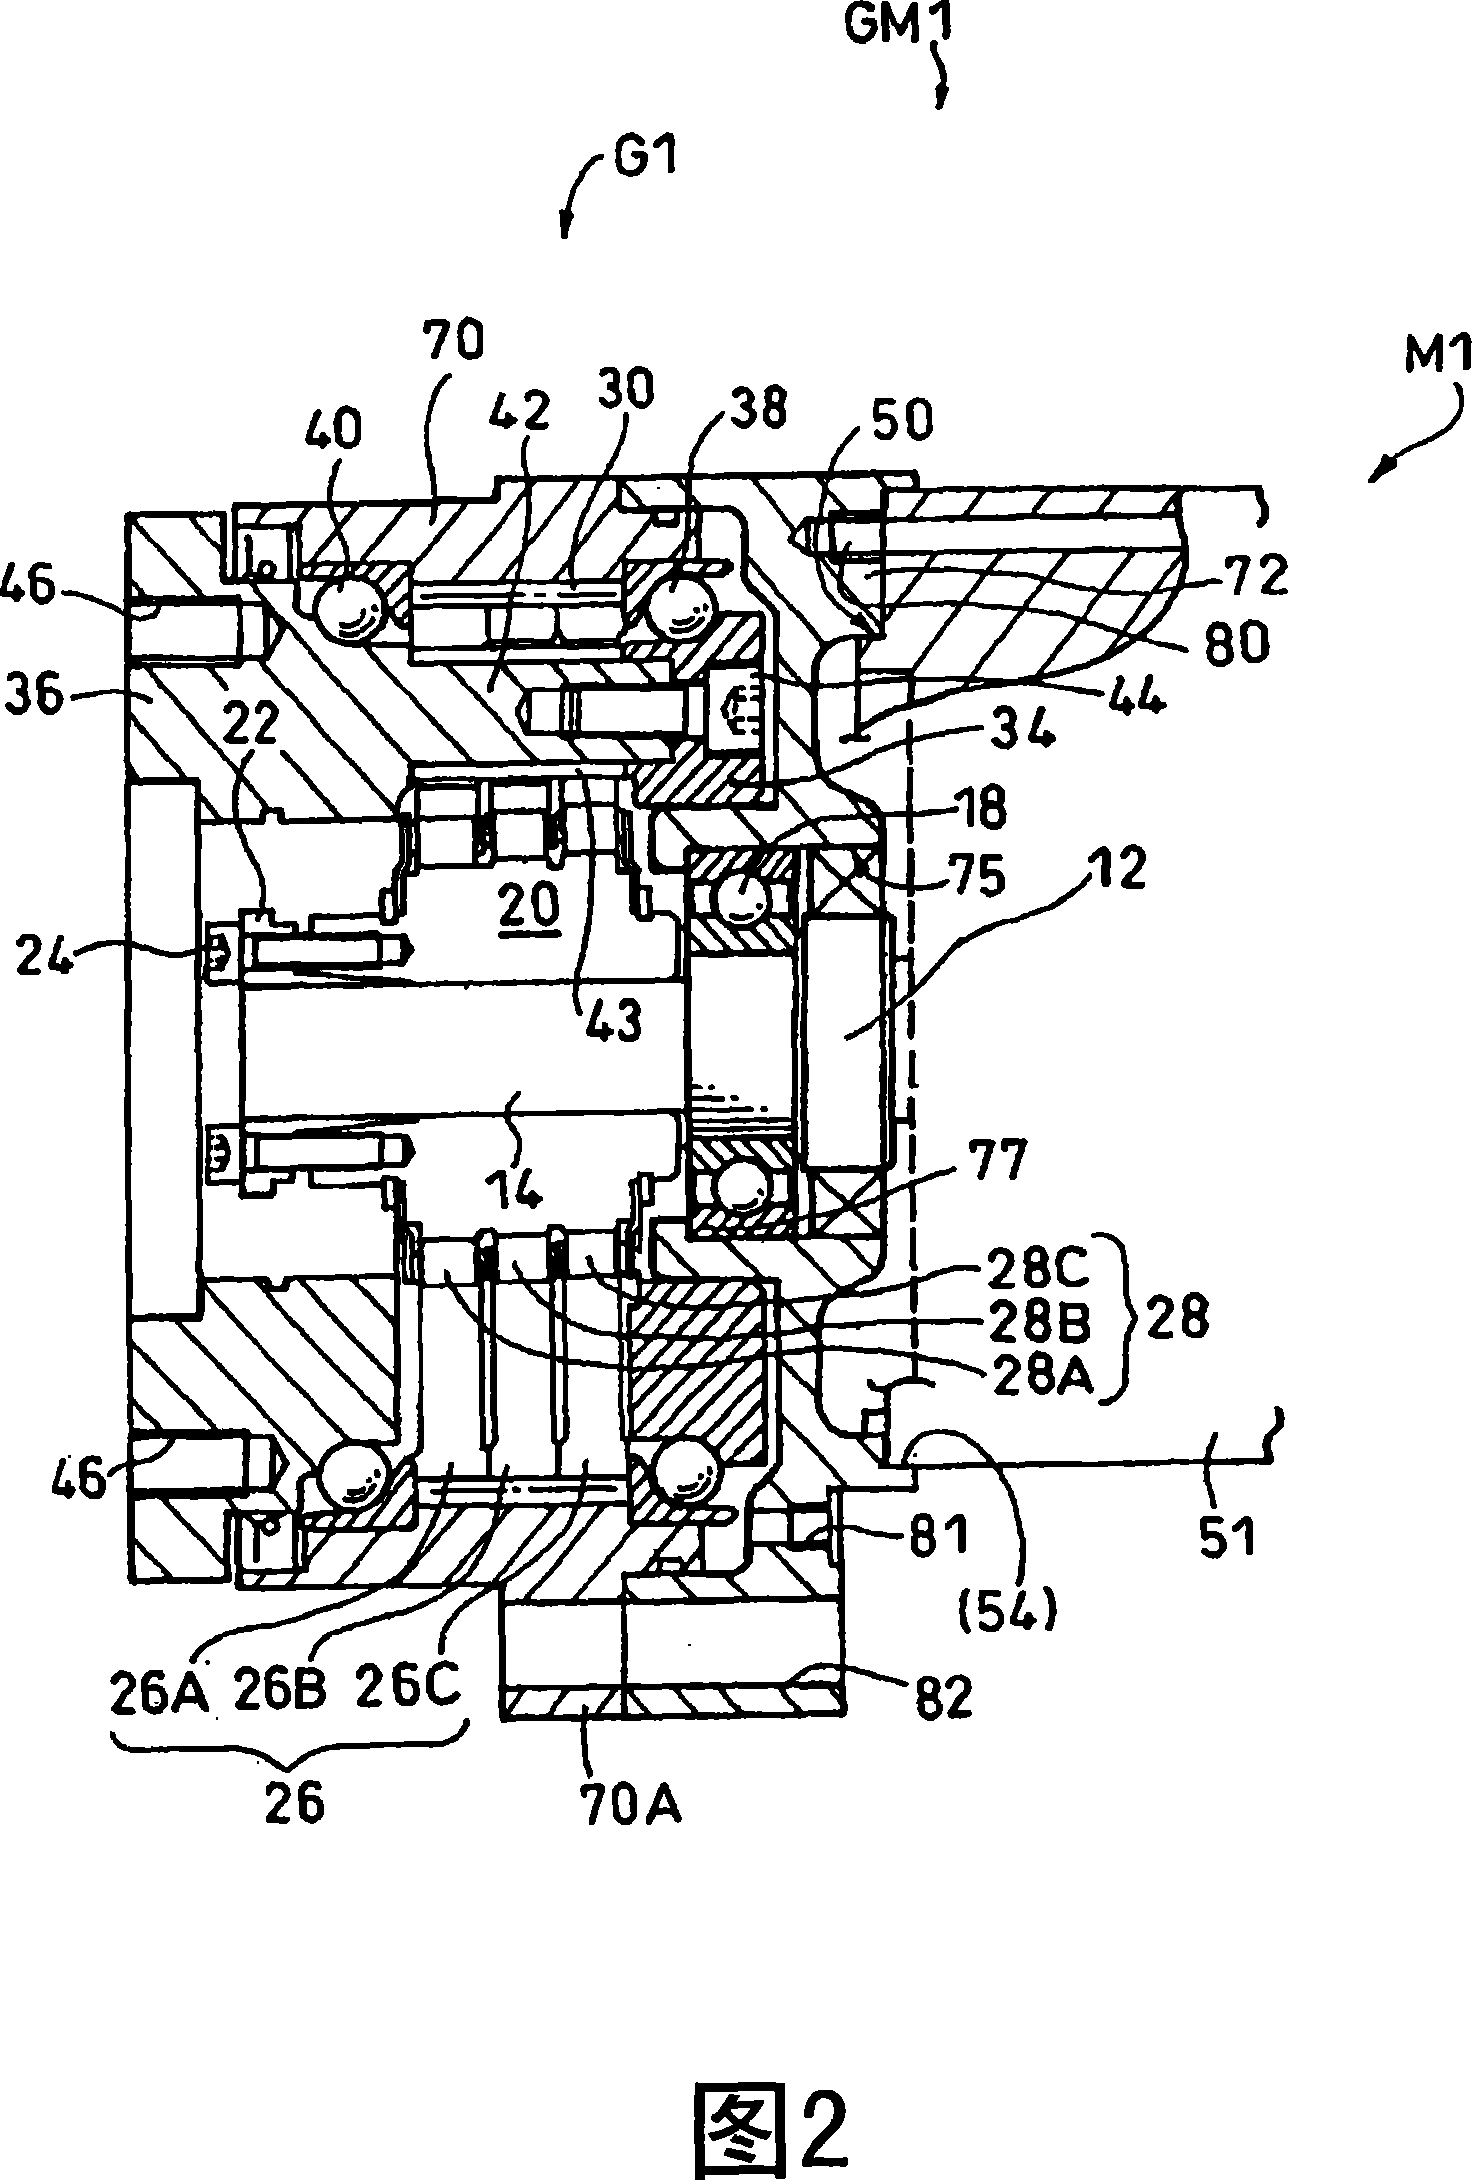 Gear transmission motor and robot gear transmission motor